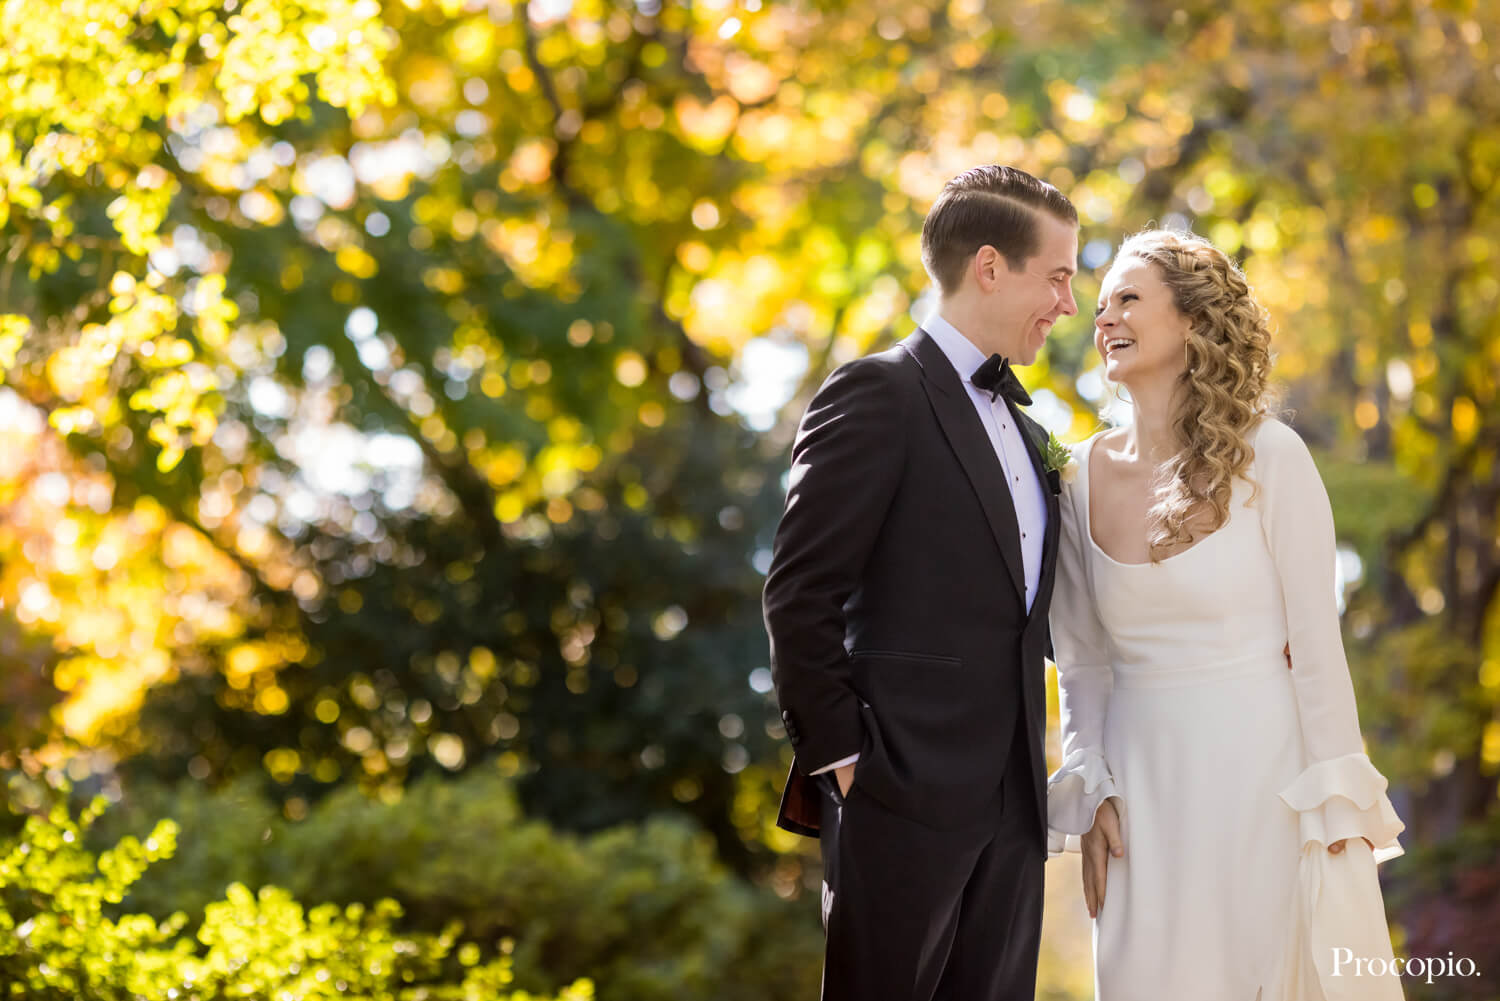 Fall wedding - best Washington DC wedding planner - The Plannery - photo by Procopio Photography